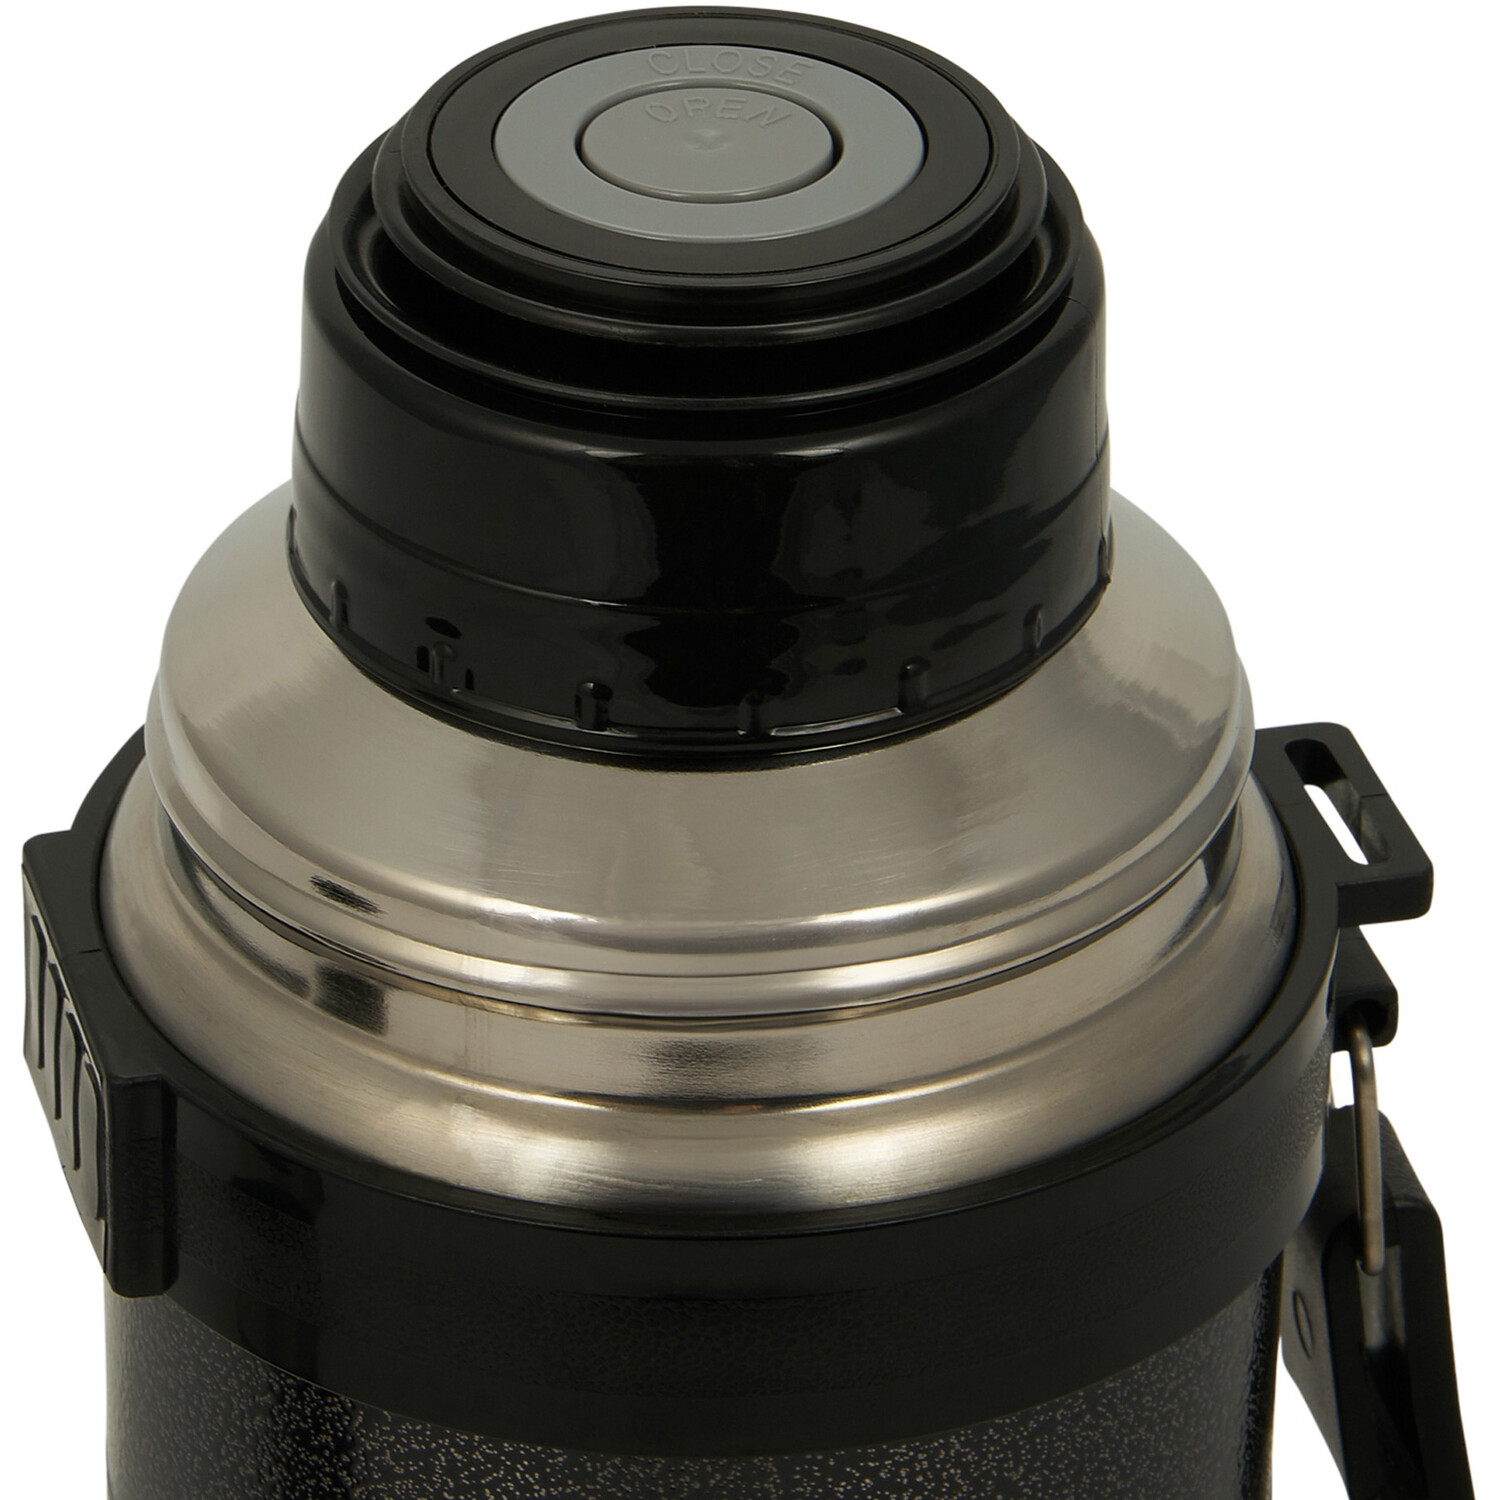 Nitro 2-Cup Hammered Flask - Black Image 6